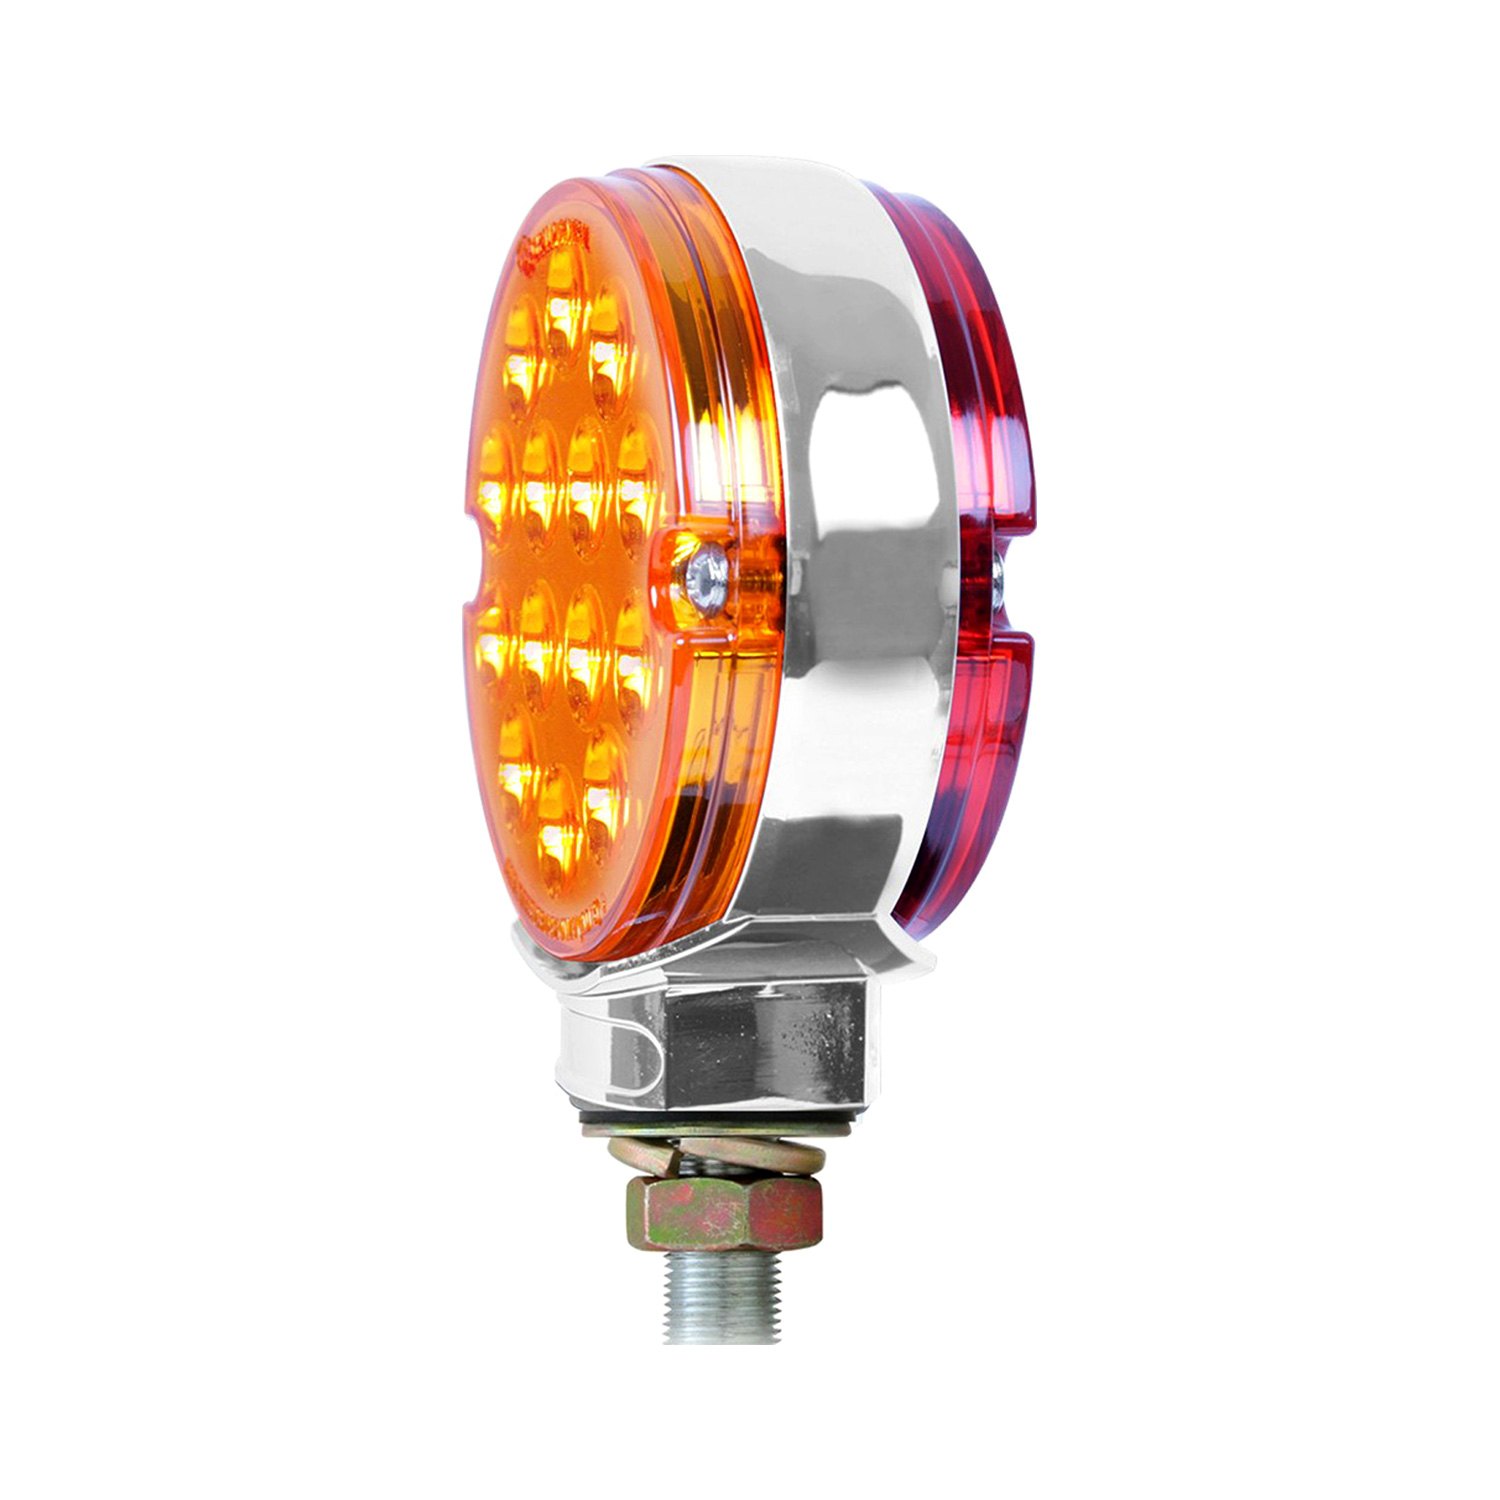 Details about   Signal Light Signal Lamp 14mm 220vac Inspection Lamp-Colour Choice! Farbauswahl data-mtsrclang=en-US href=# onclick=return false; 							show original title e